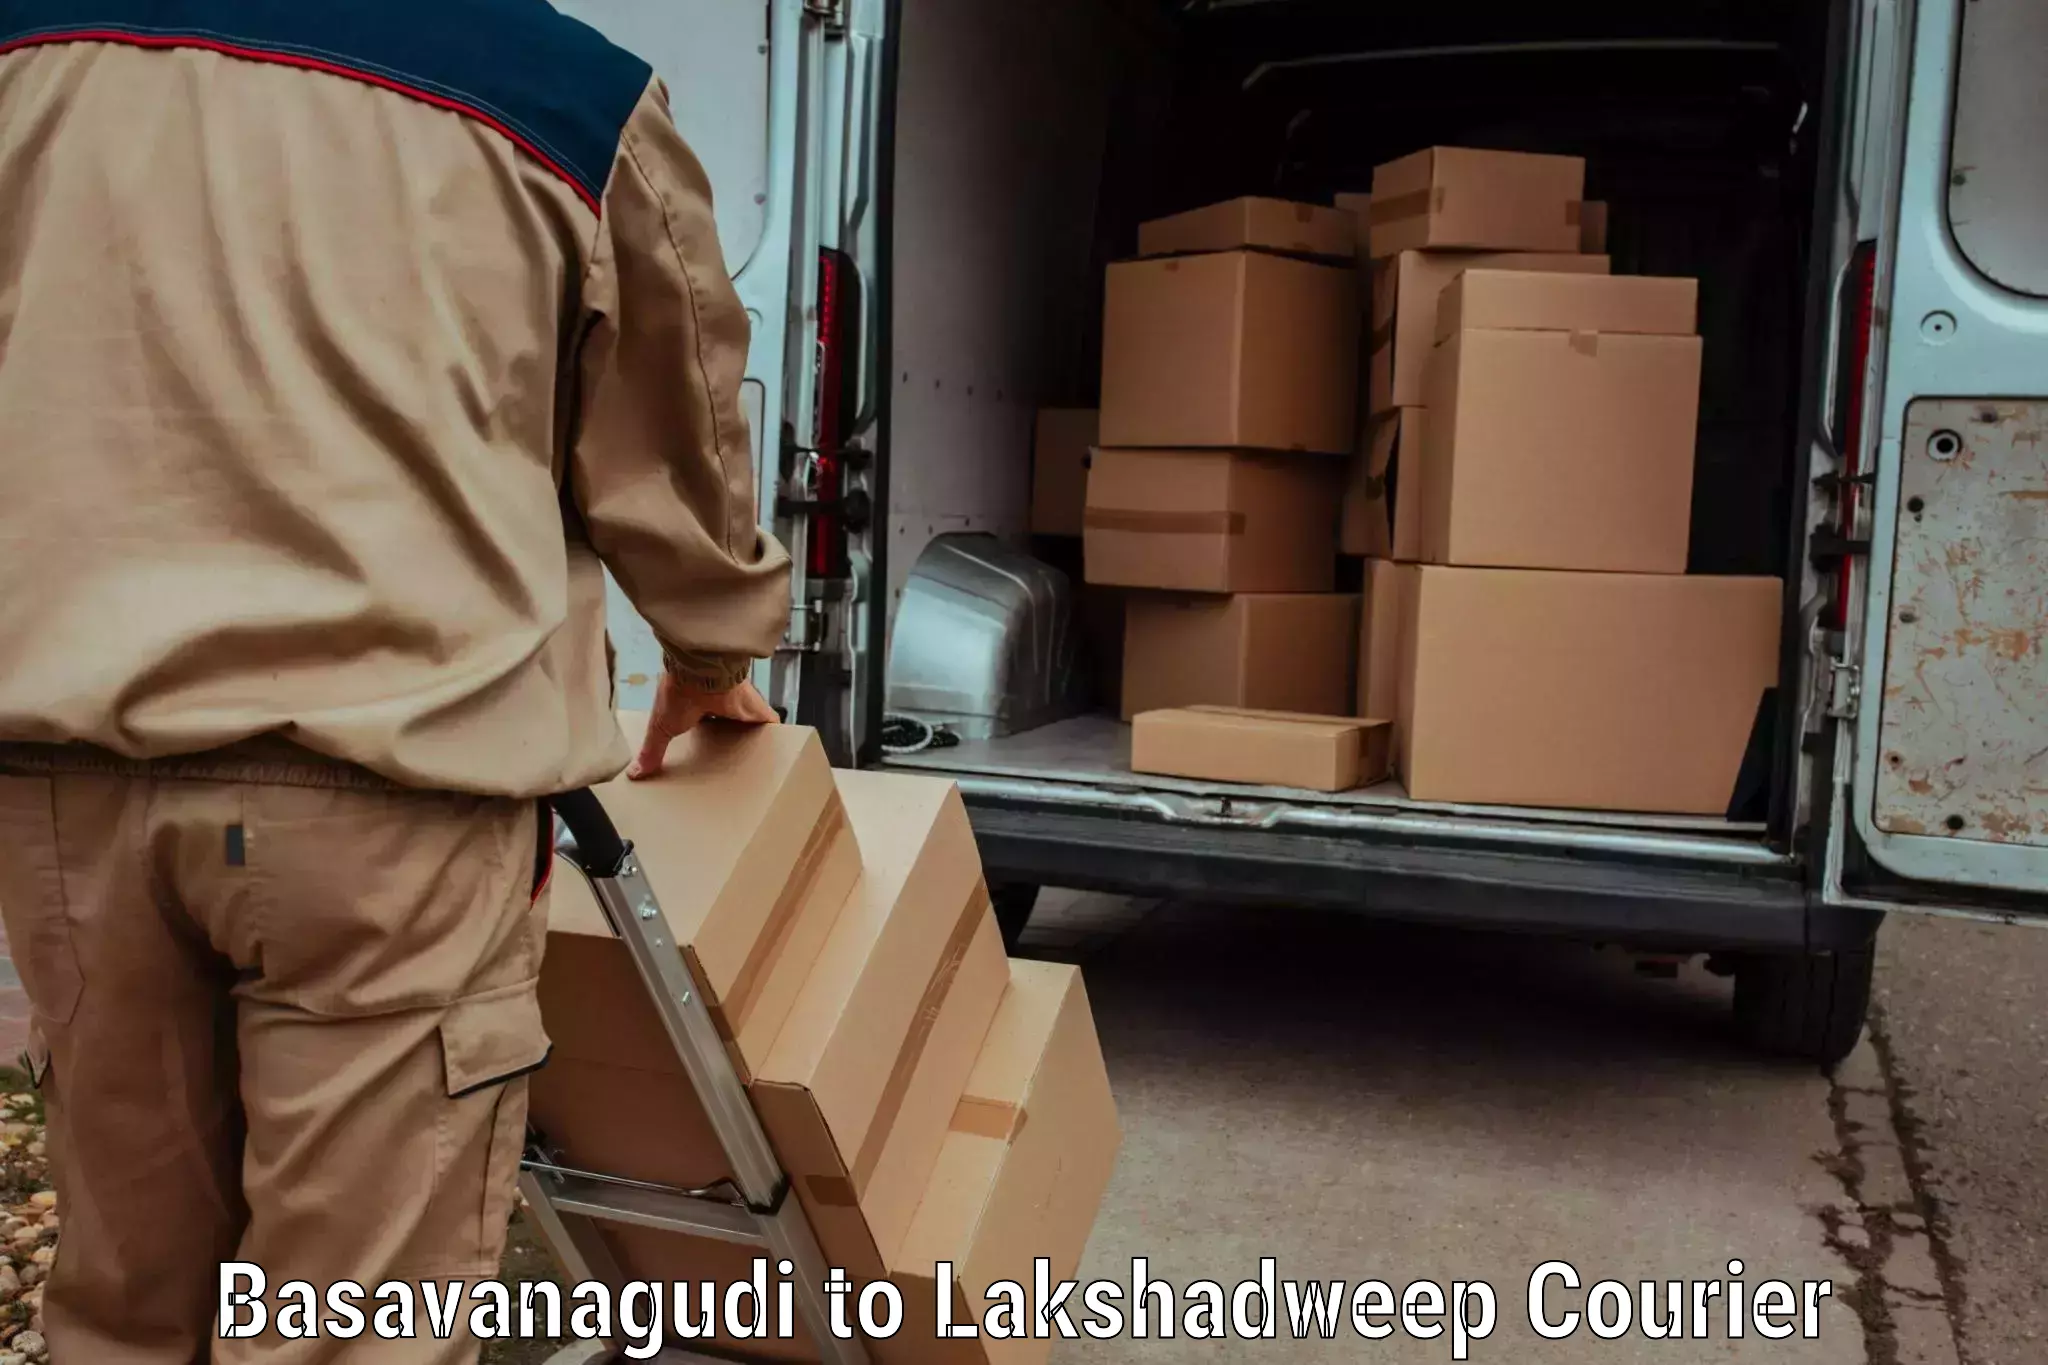 24-hour courier service in Basavanagudi to Lakshadweep